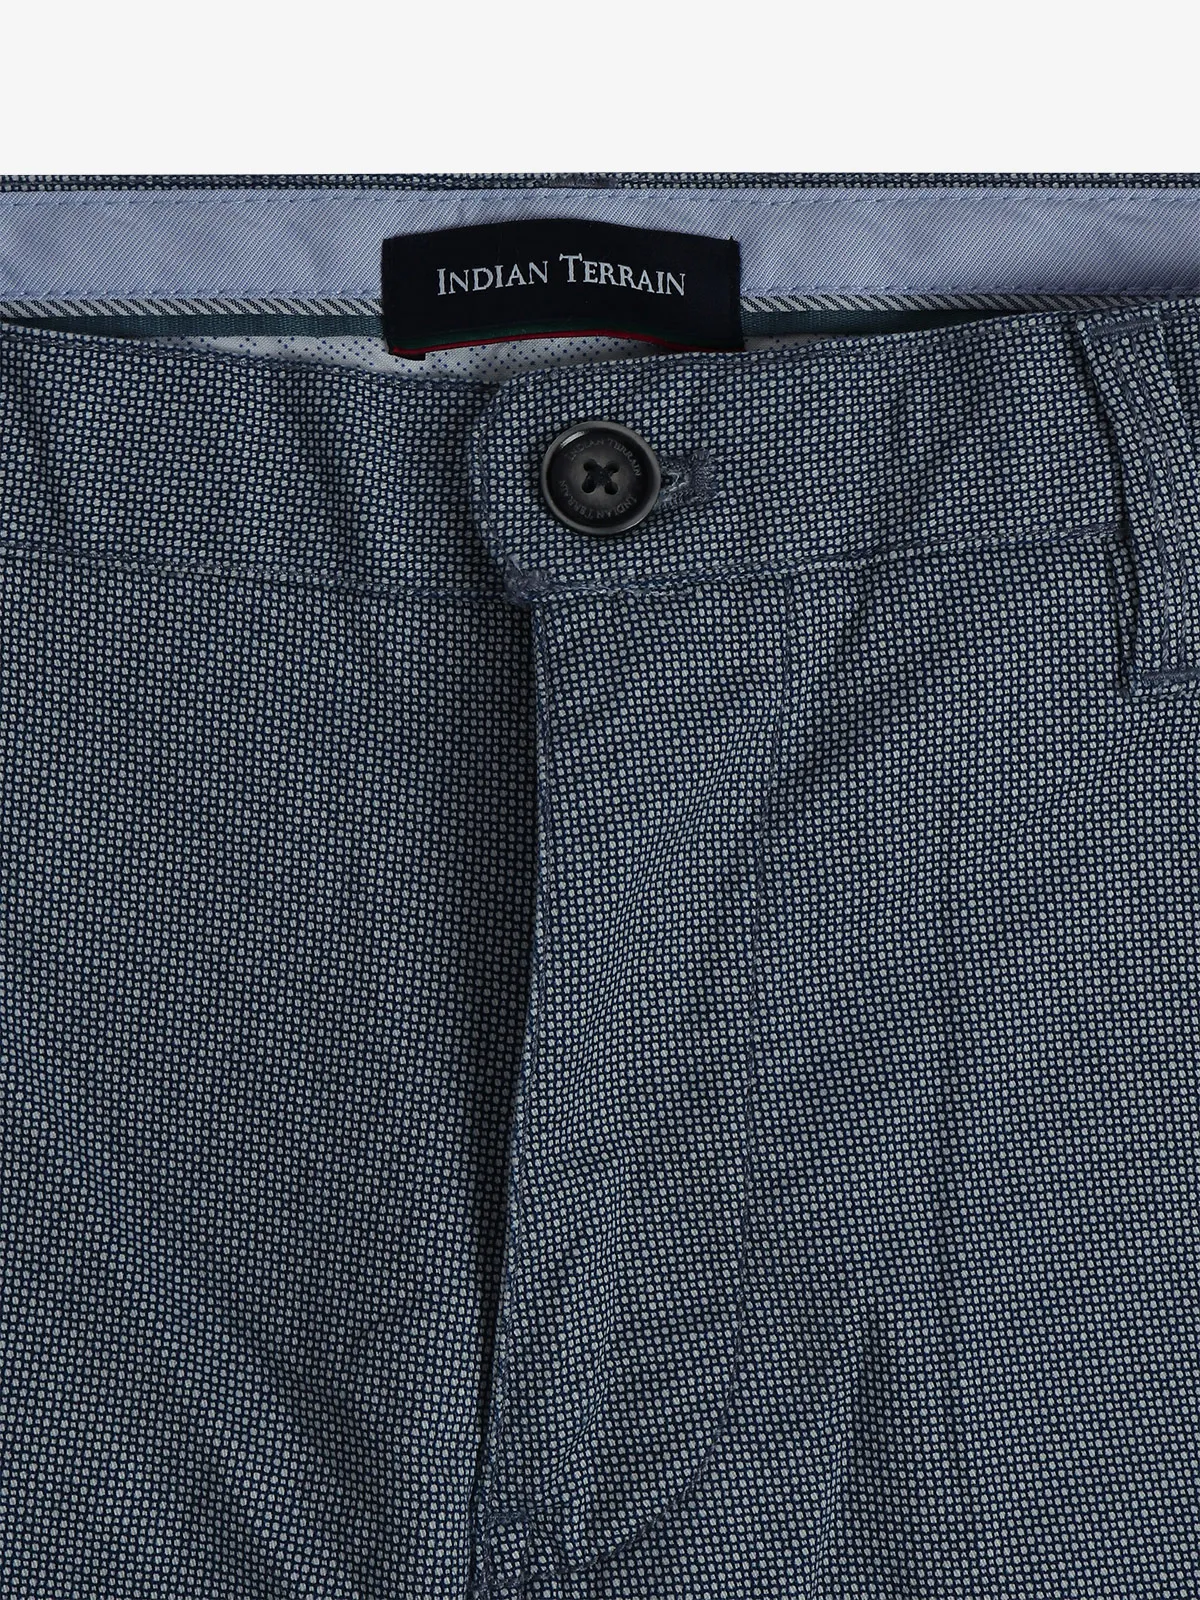 INDIAN TERRAIN blue cotton printed trouser